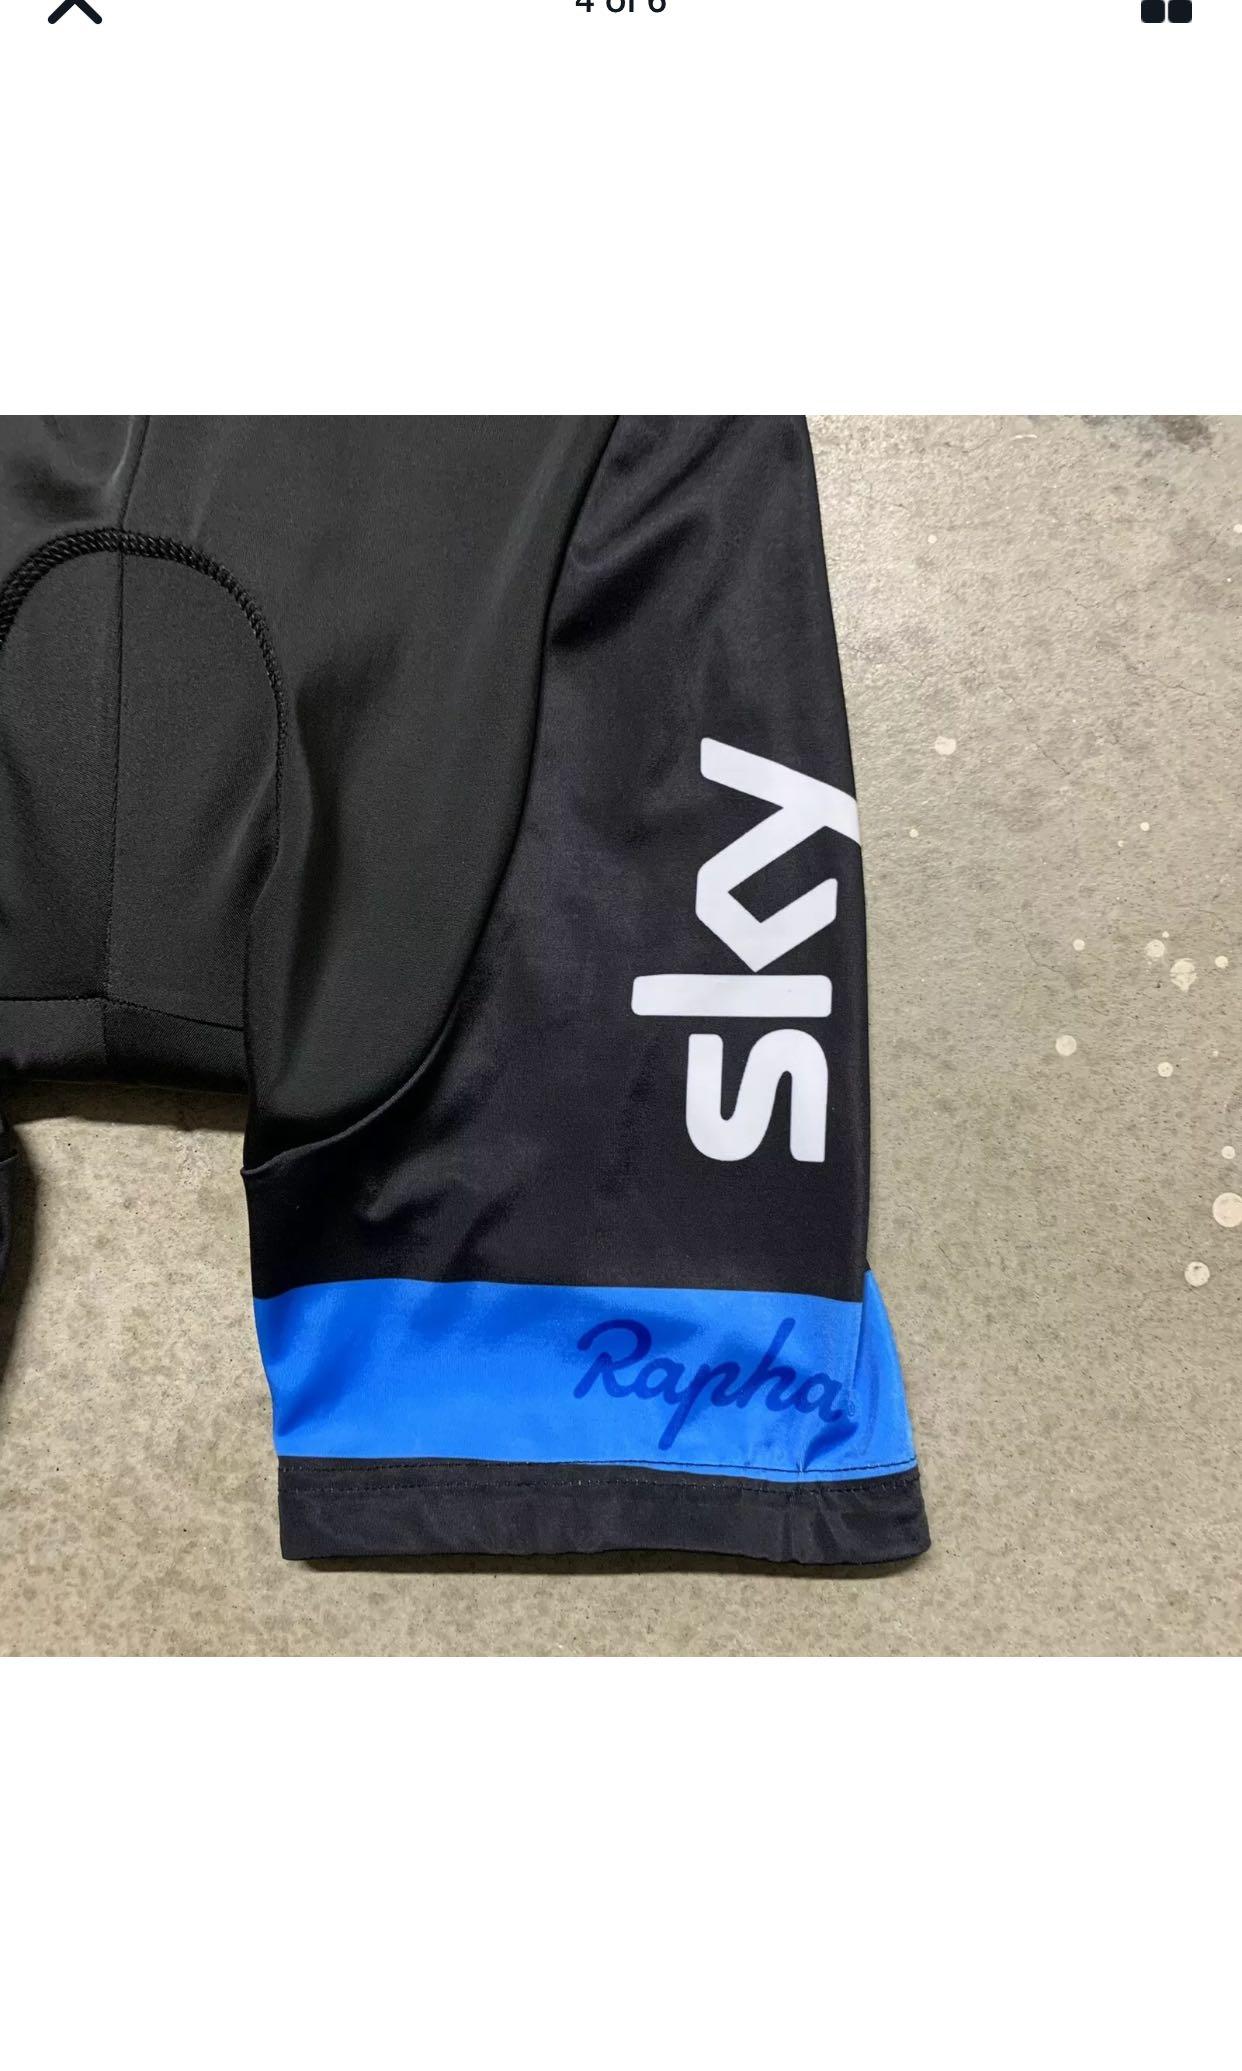 Rapha Team Sky Men's Replica Bib Shorts Size Small 單車連身衣單車